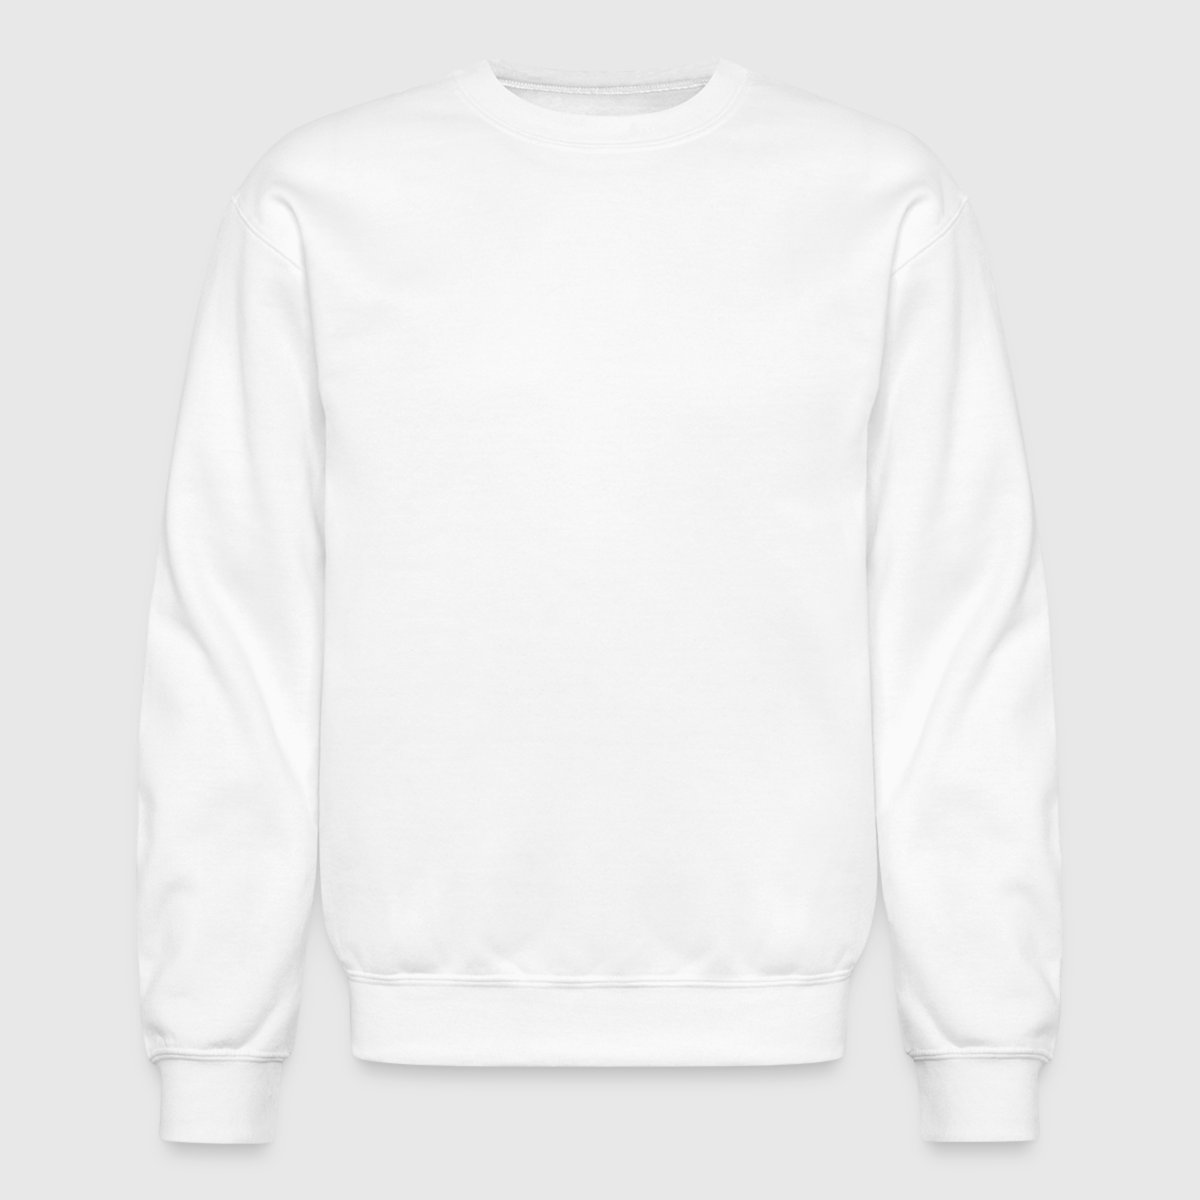 Unisex Crewneck Sweatshirt - Front